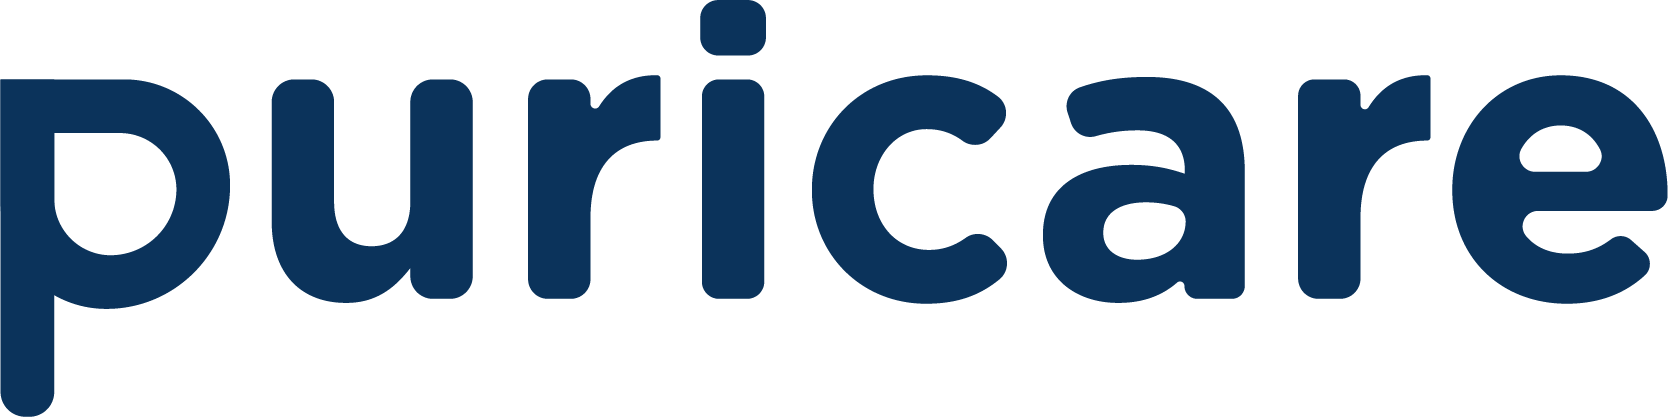 Puricare Solutions Pte. Ltd. logo